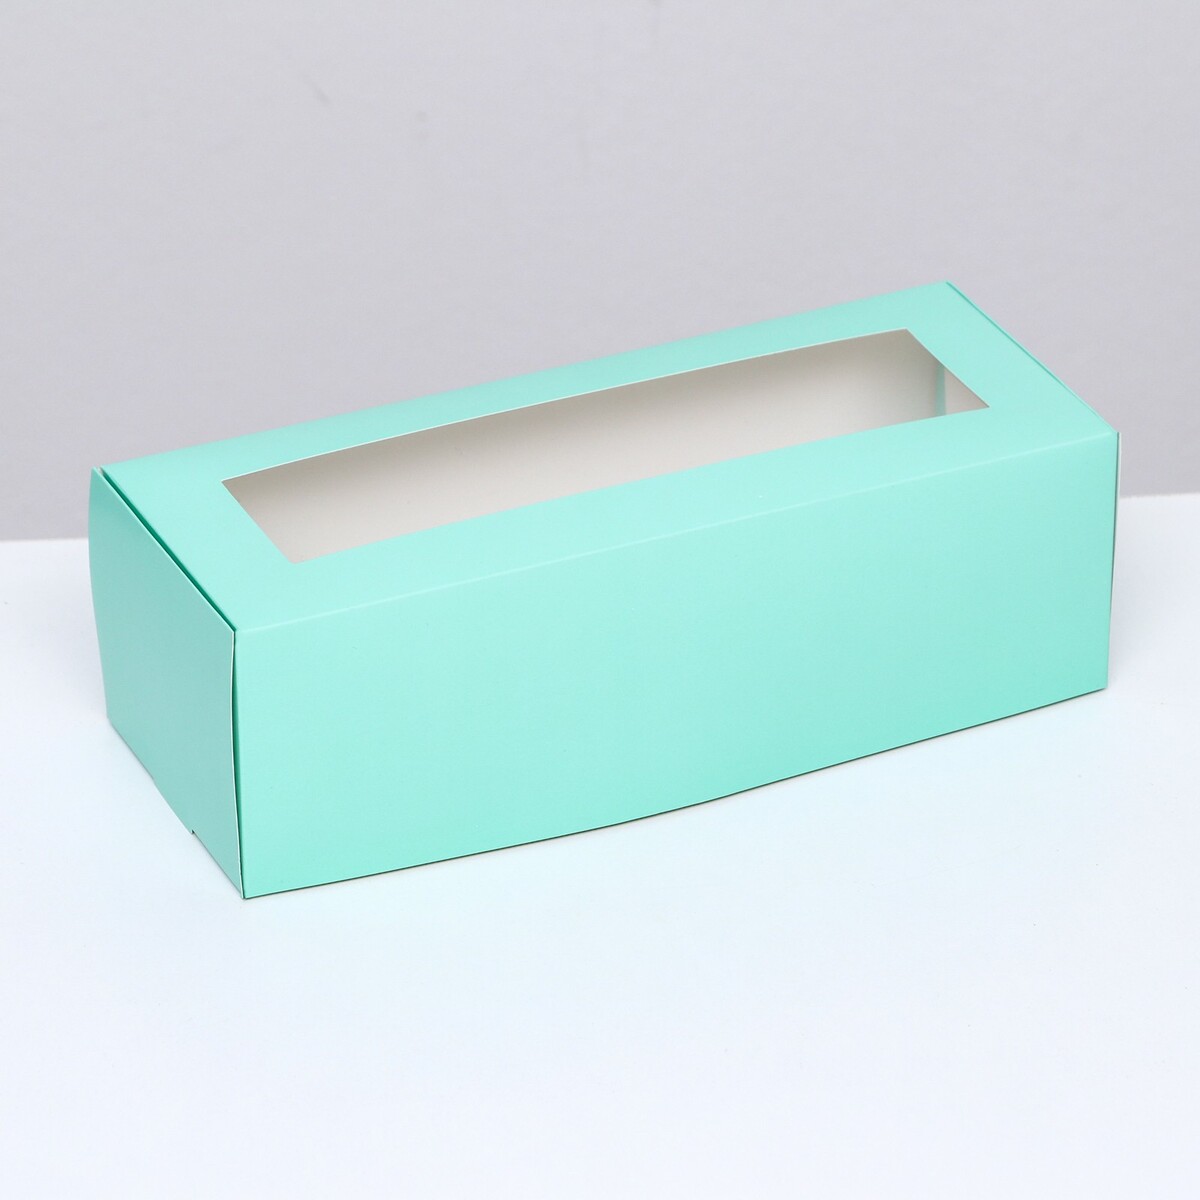 Коробка складная с окном под рулет, зеленая, 26 х 10 х 8 см коробка под рулет с ручками белая 27 5 х 11 х 10 см